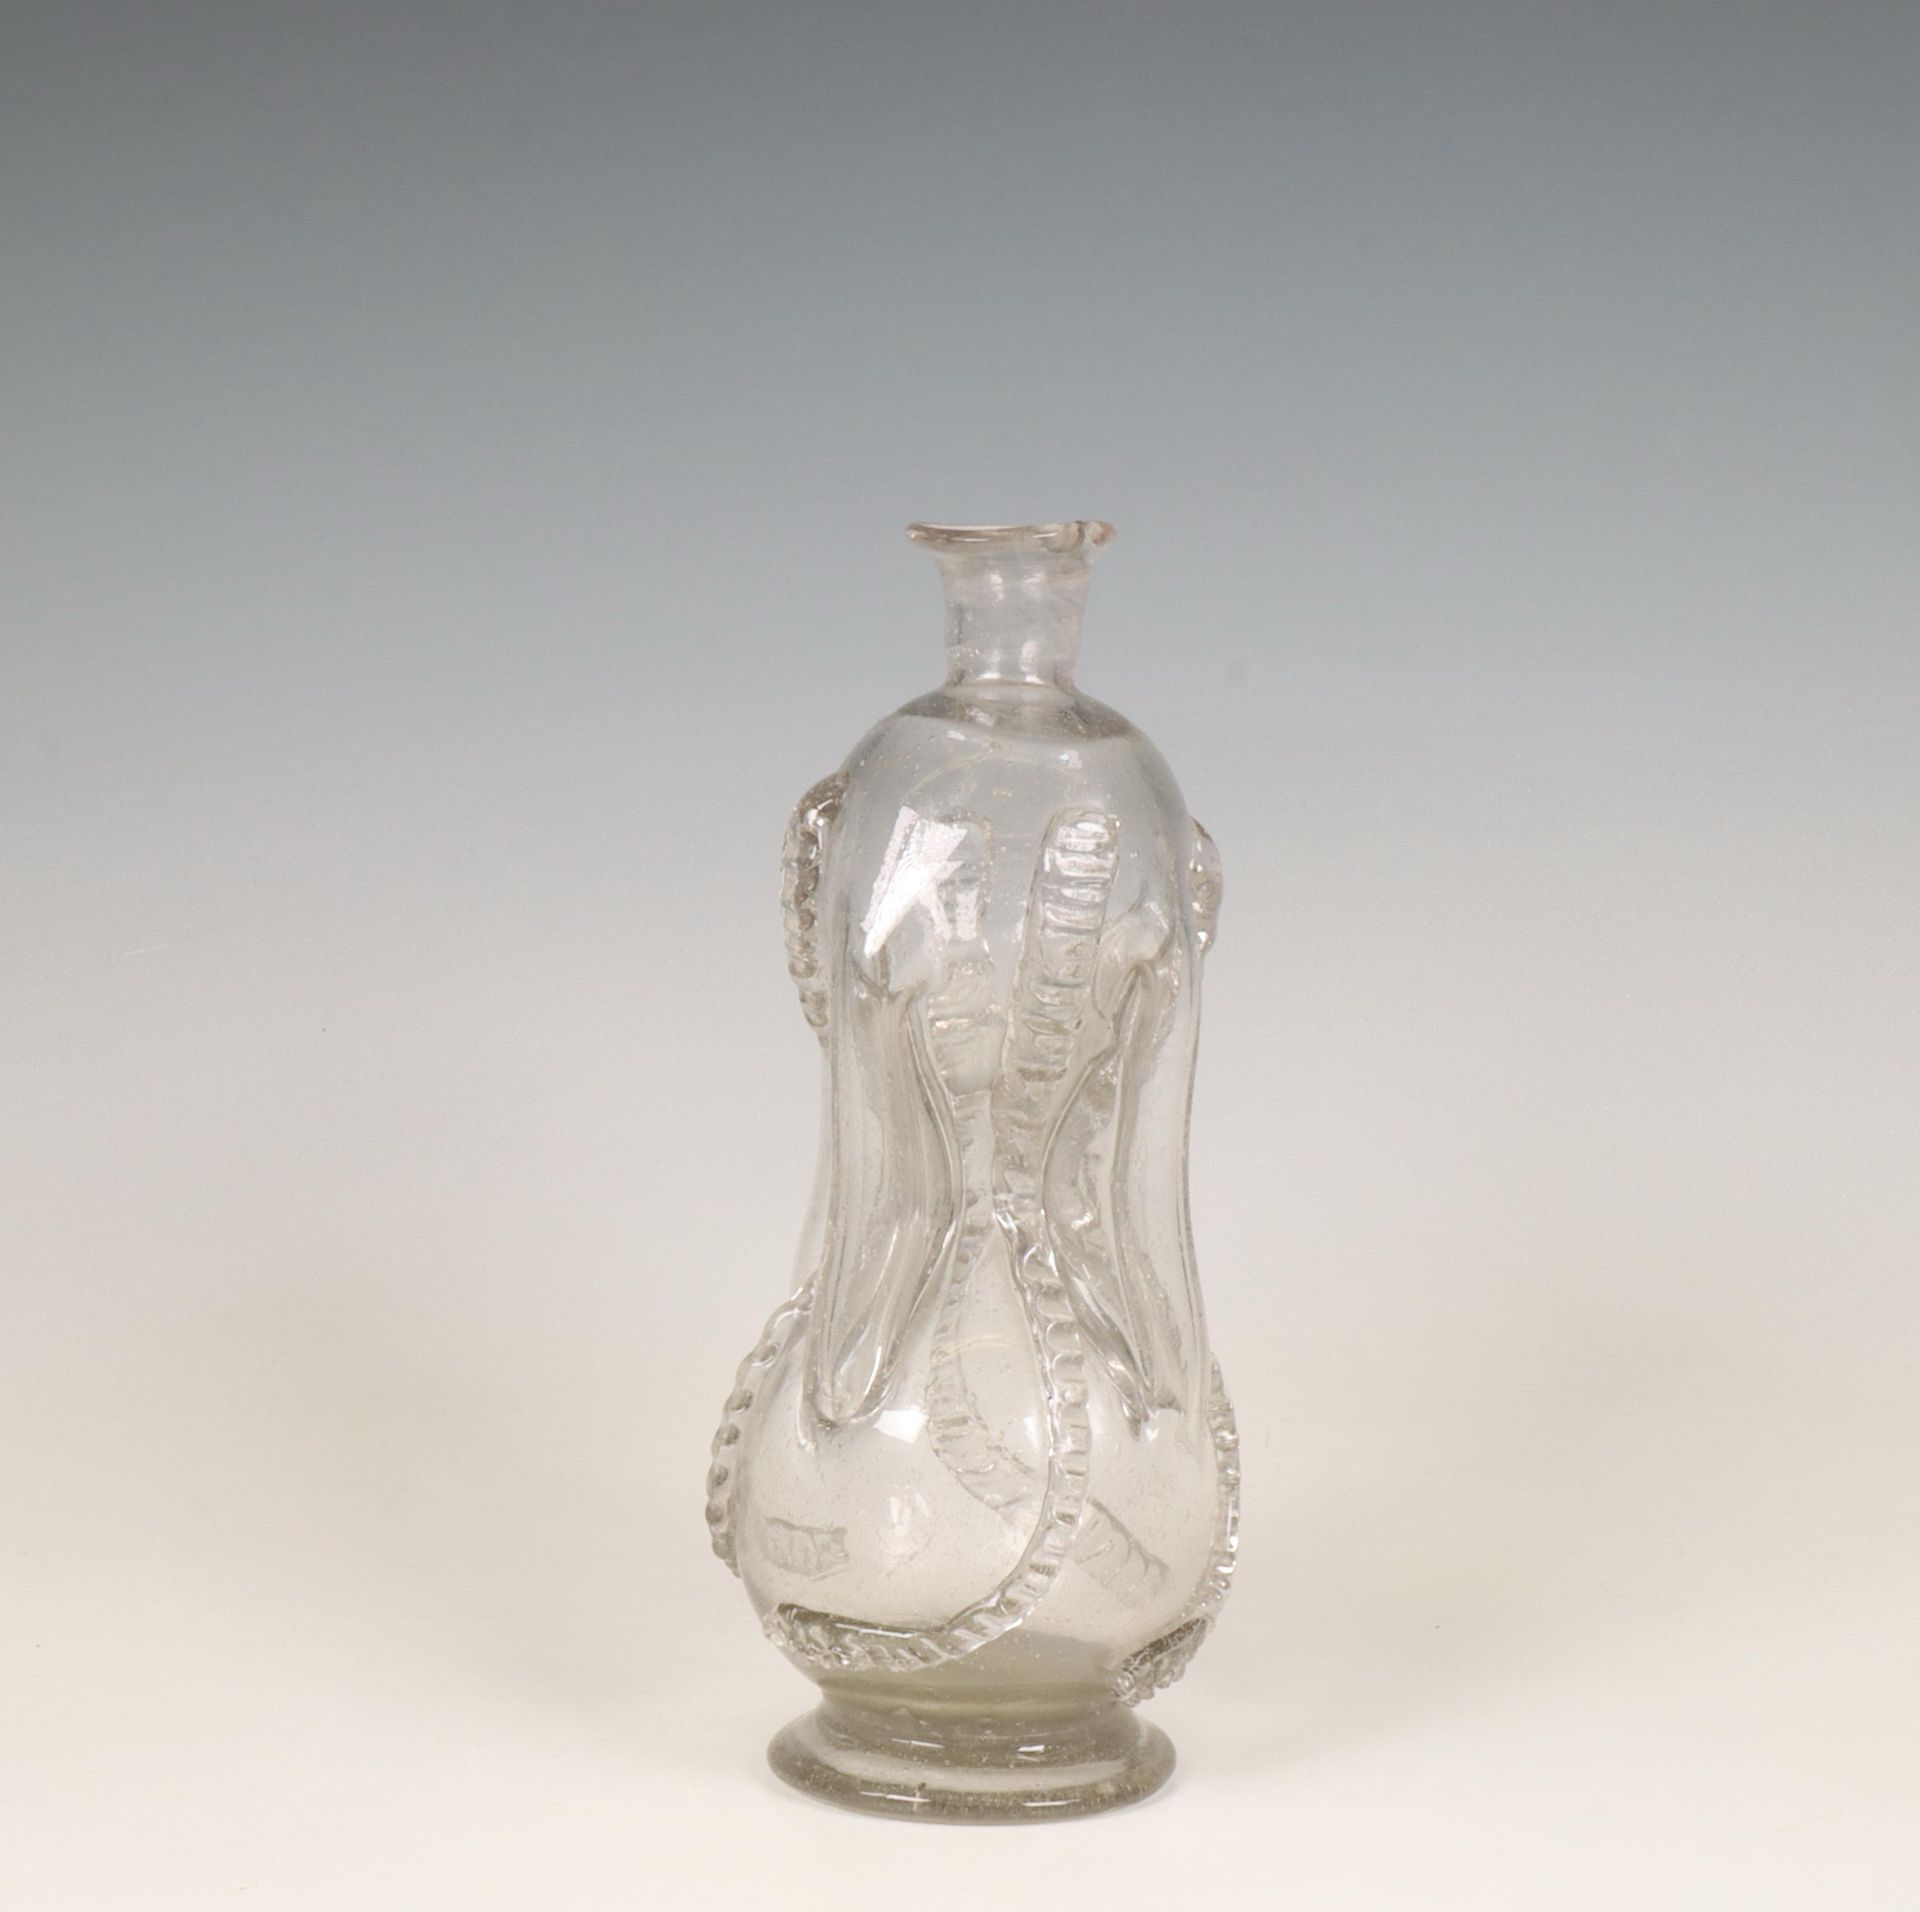 Geknepen fles, 18e eeuw